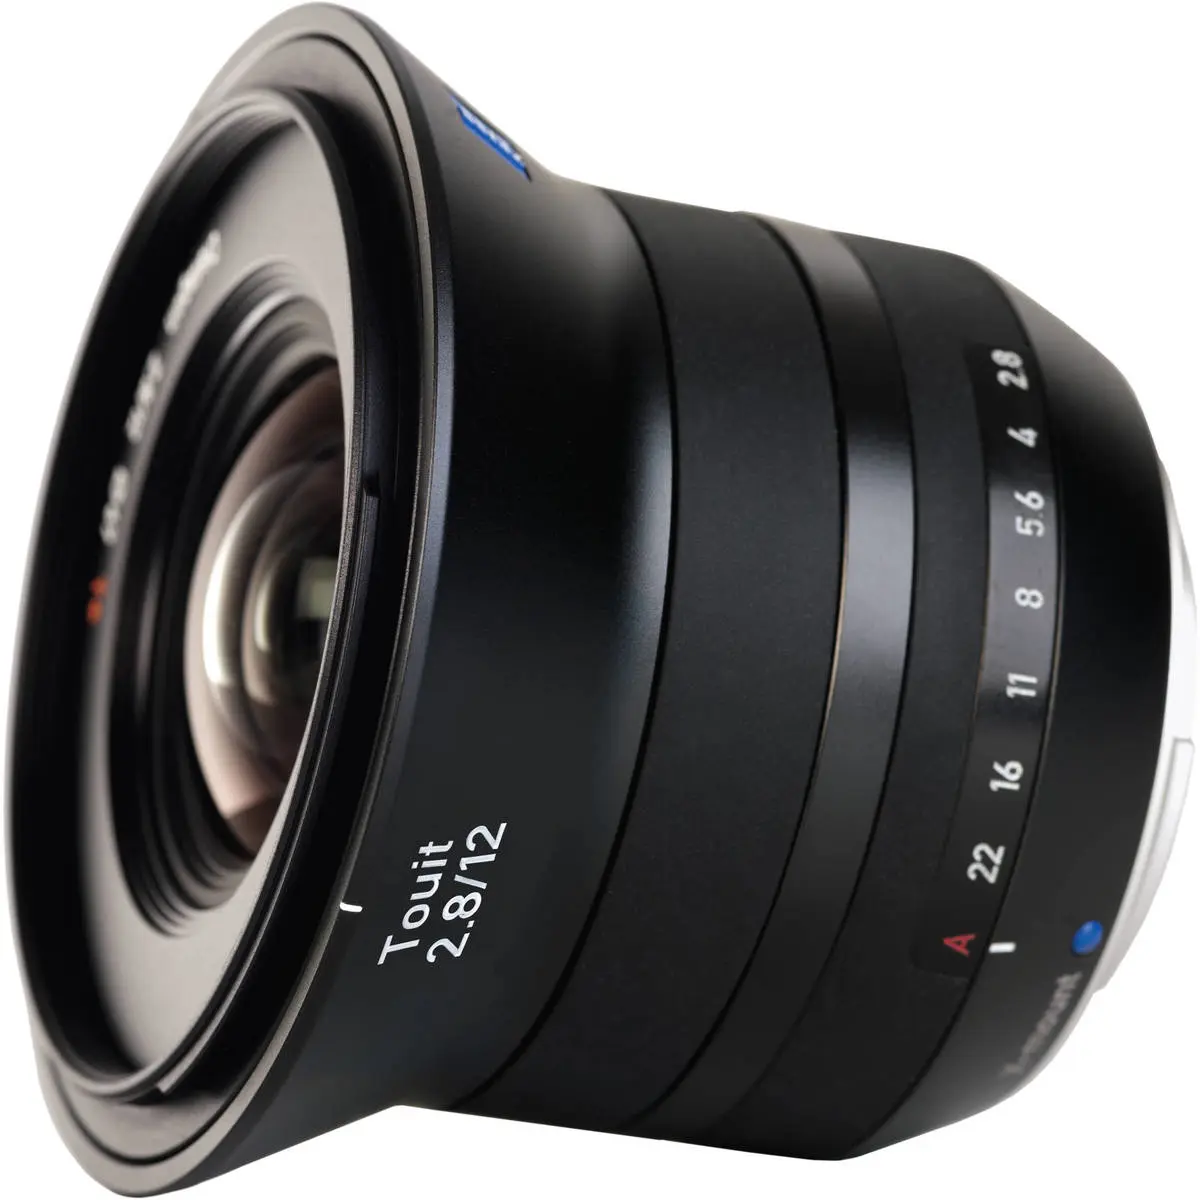 6. Carl Zeiss Touit 2.8/12 Distagon T* (Fuji X) Lens